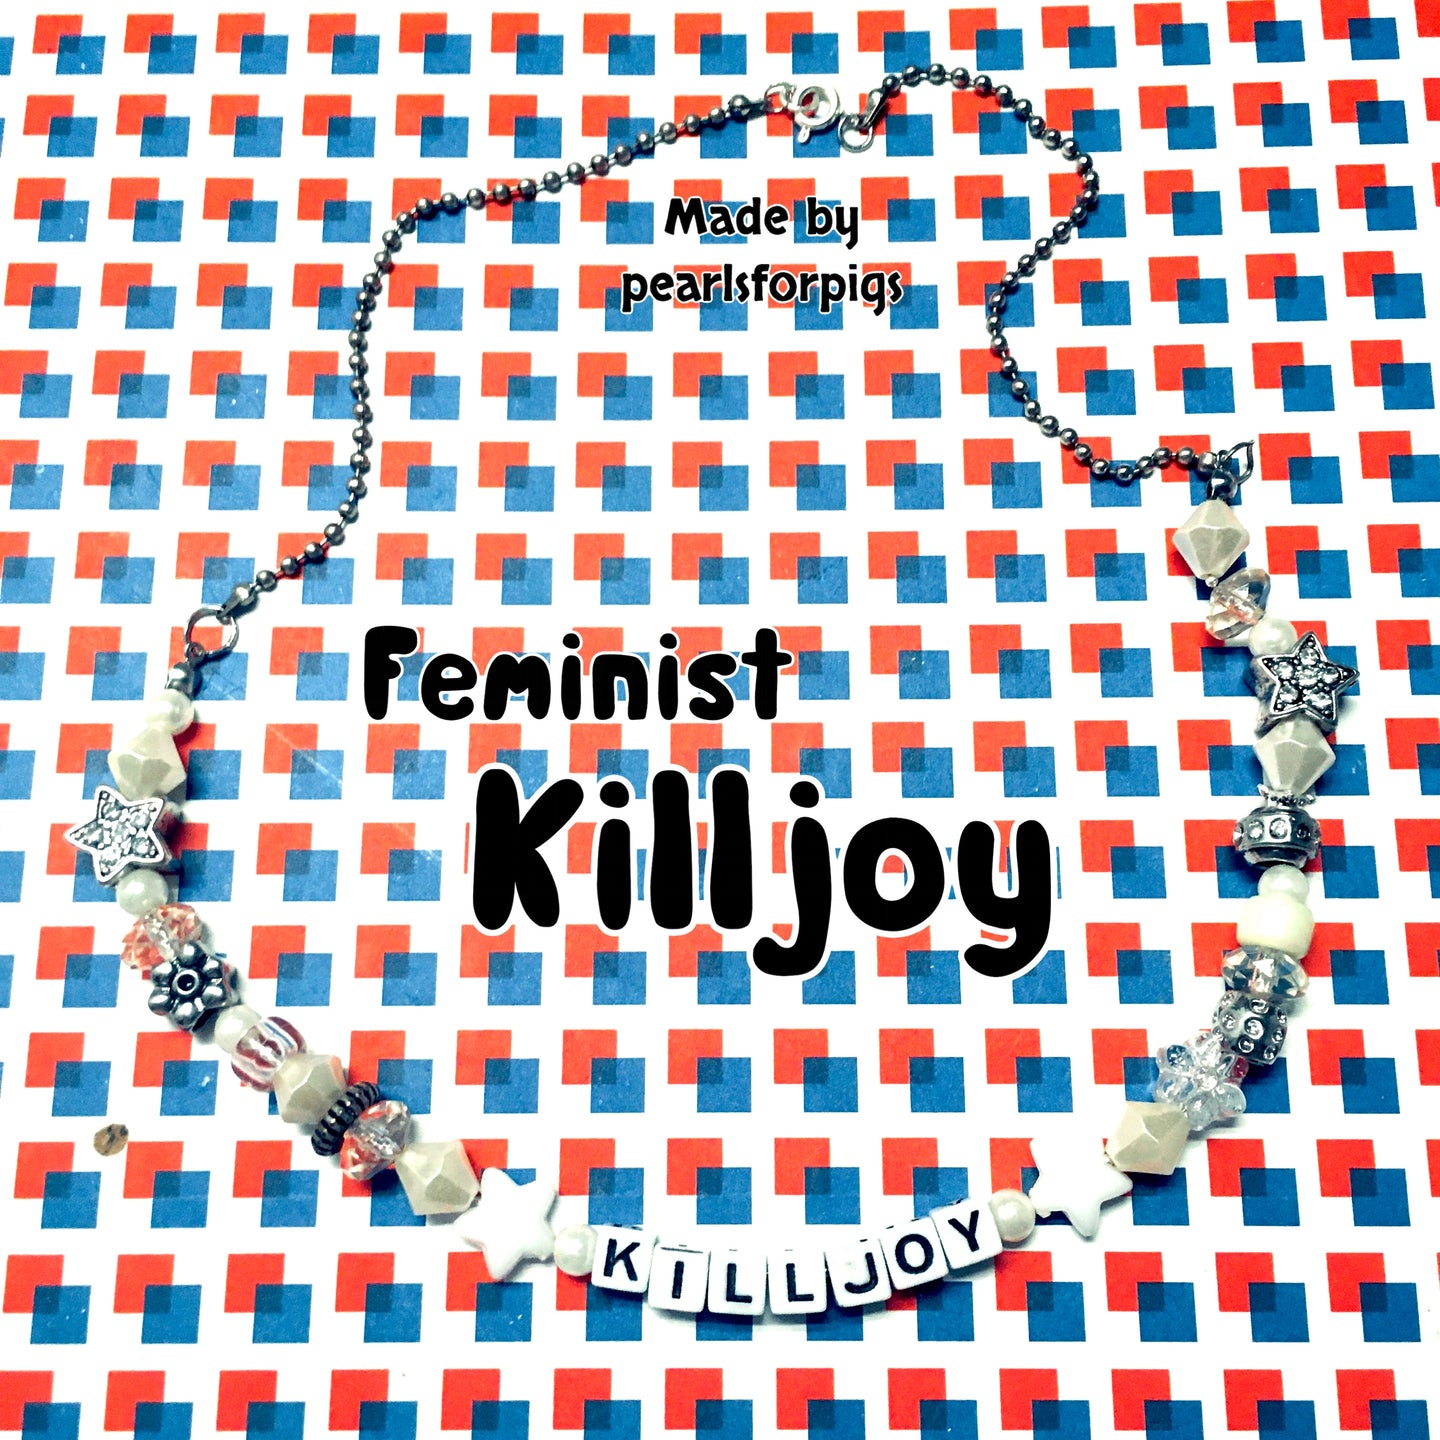 Feminist killjoy